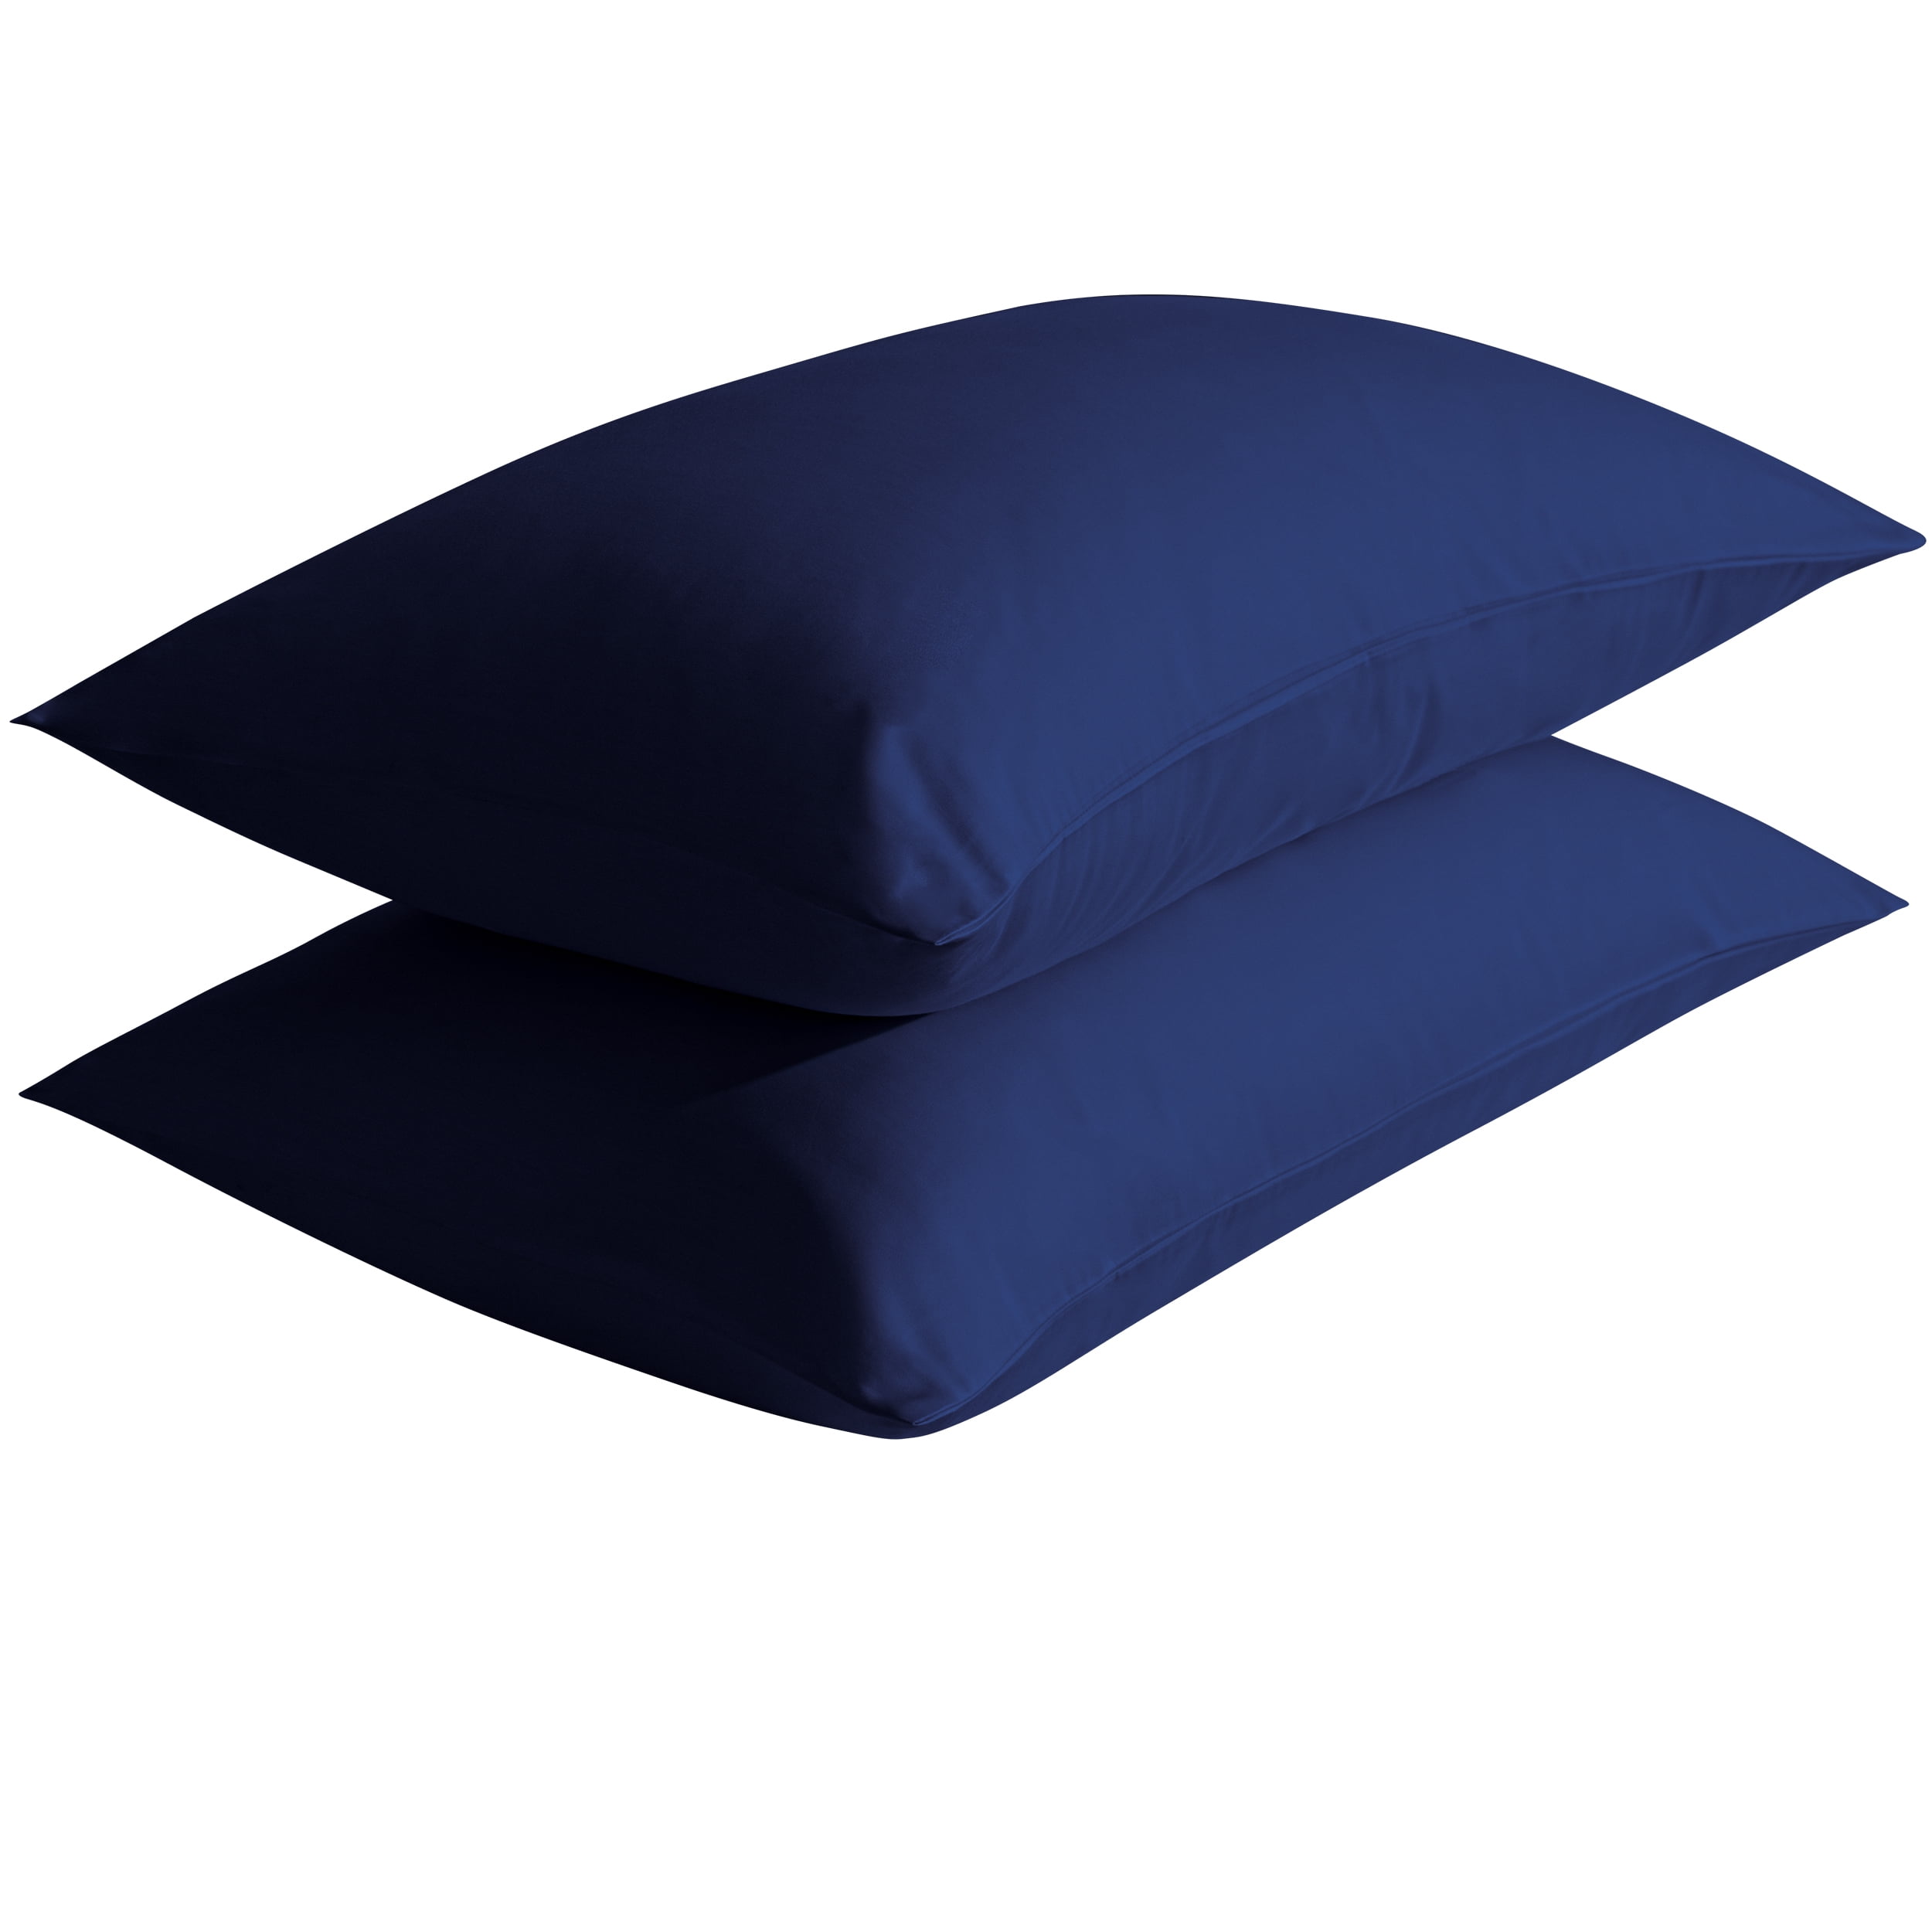 Details about   300TC 100% Egyptian Cotton Luxury Satin Stripe Pillow Case Cover Standard Size 